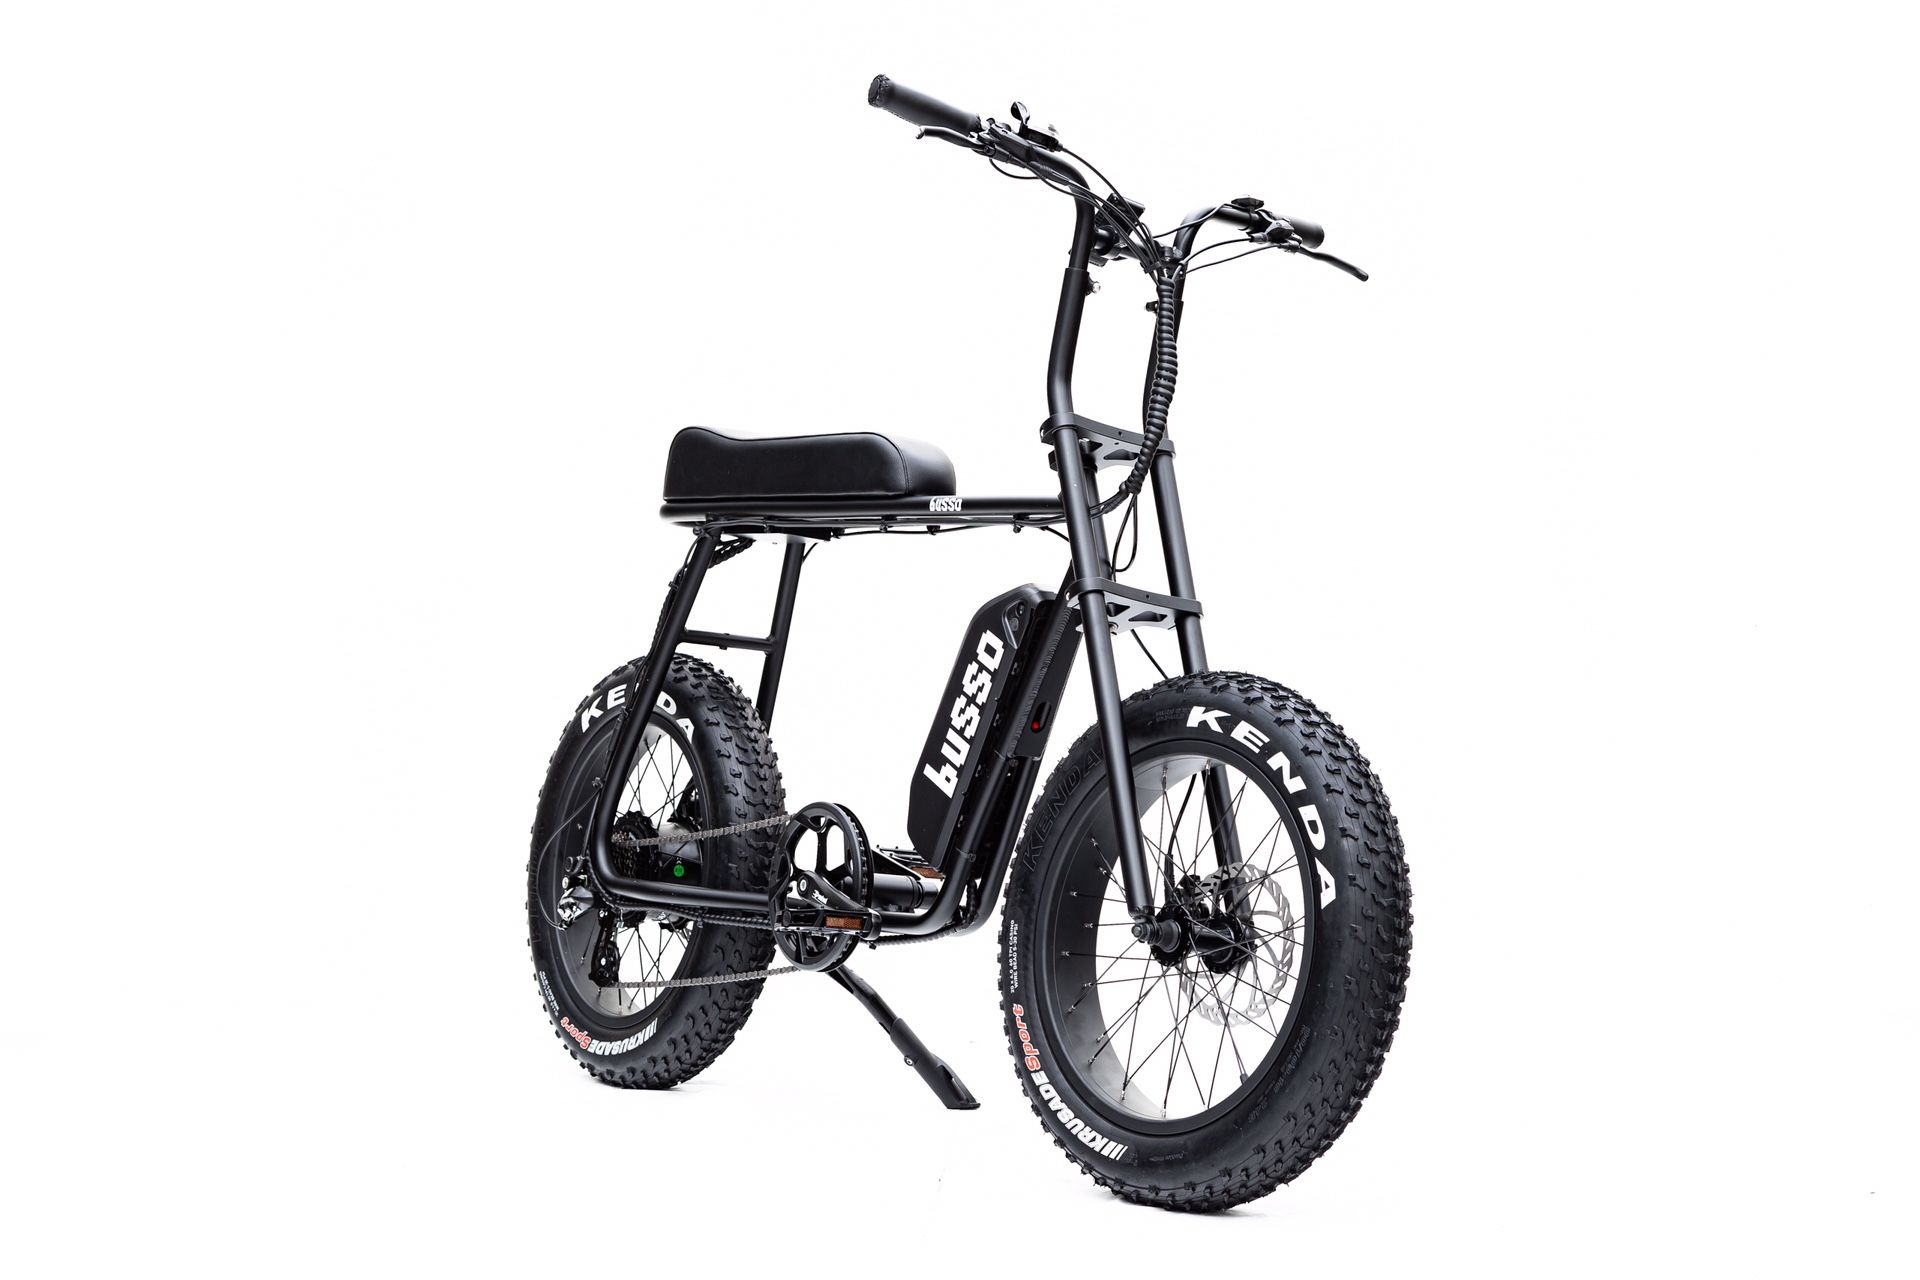 Busso Bikes 500W Electric Bike Ebike Retro Motor Bicycle Pedal Assist 25 MPH Black White